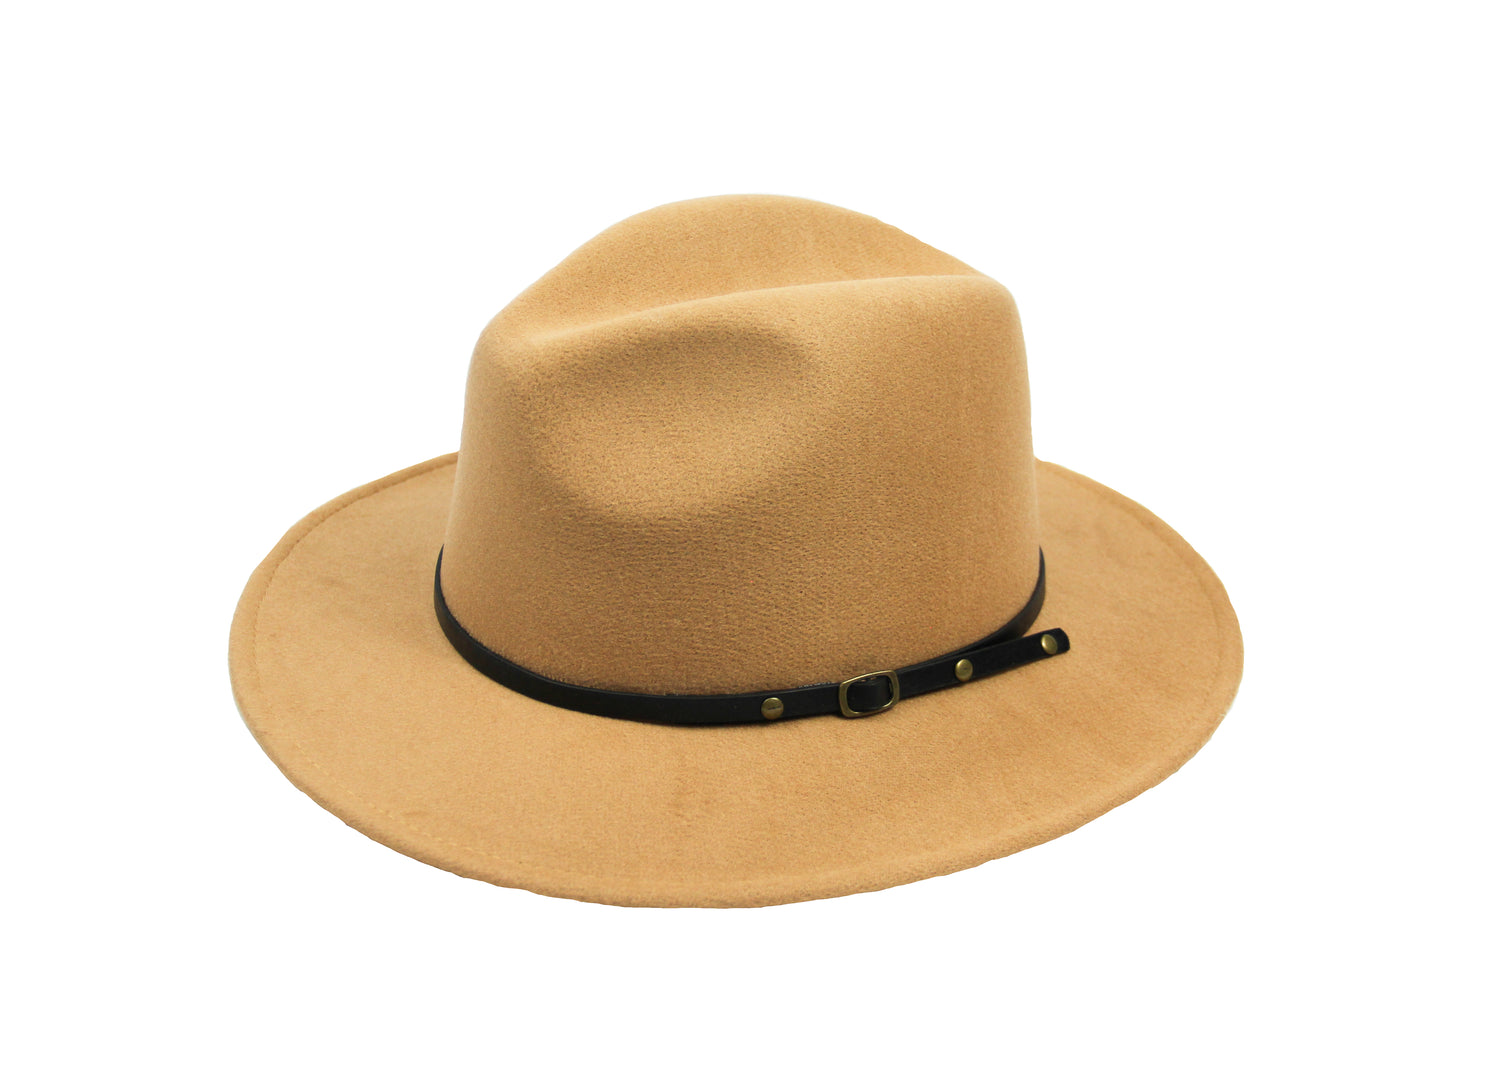 Women's Flat Wide Brim Felt Material Camel Brown Fedora Hat. Has A Side Black Belt Buckle Detail. Perfect for A Statement Piece. 